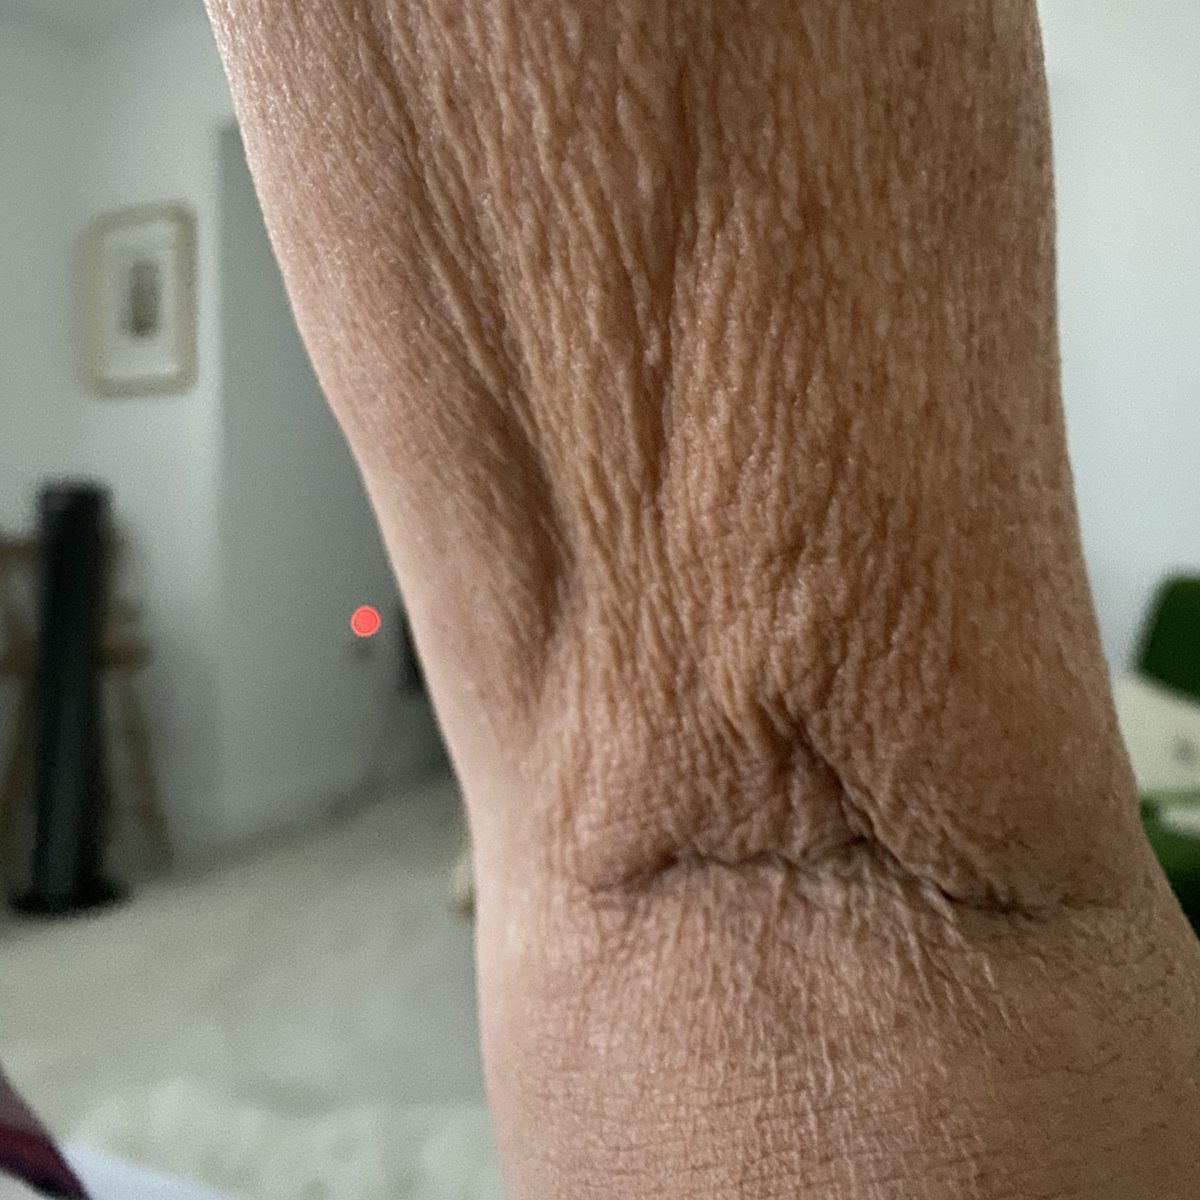 Inside elbow sagging skin